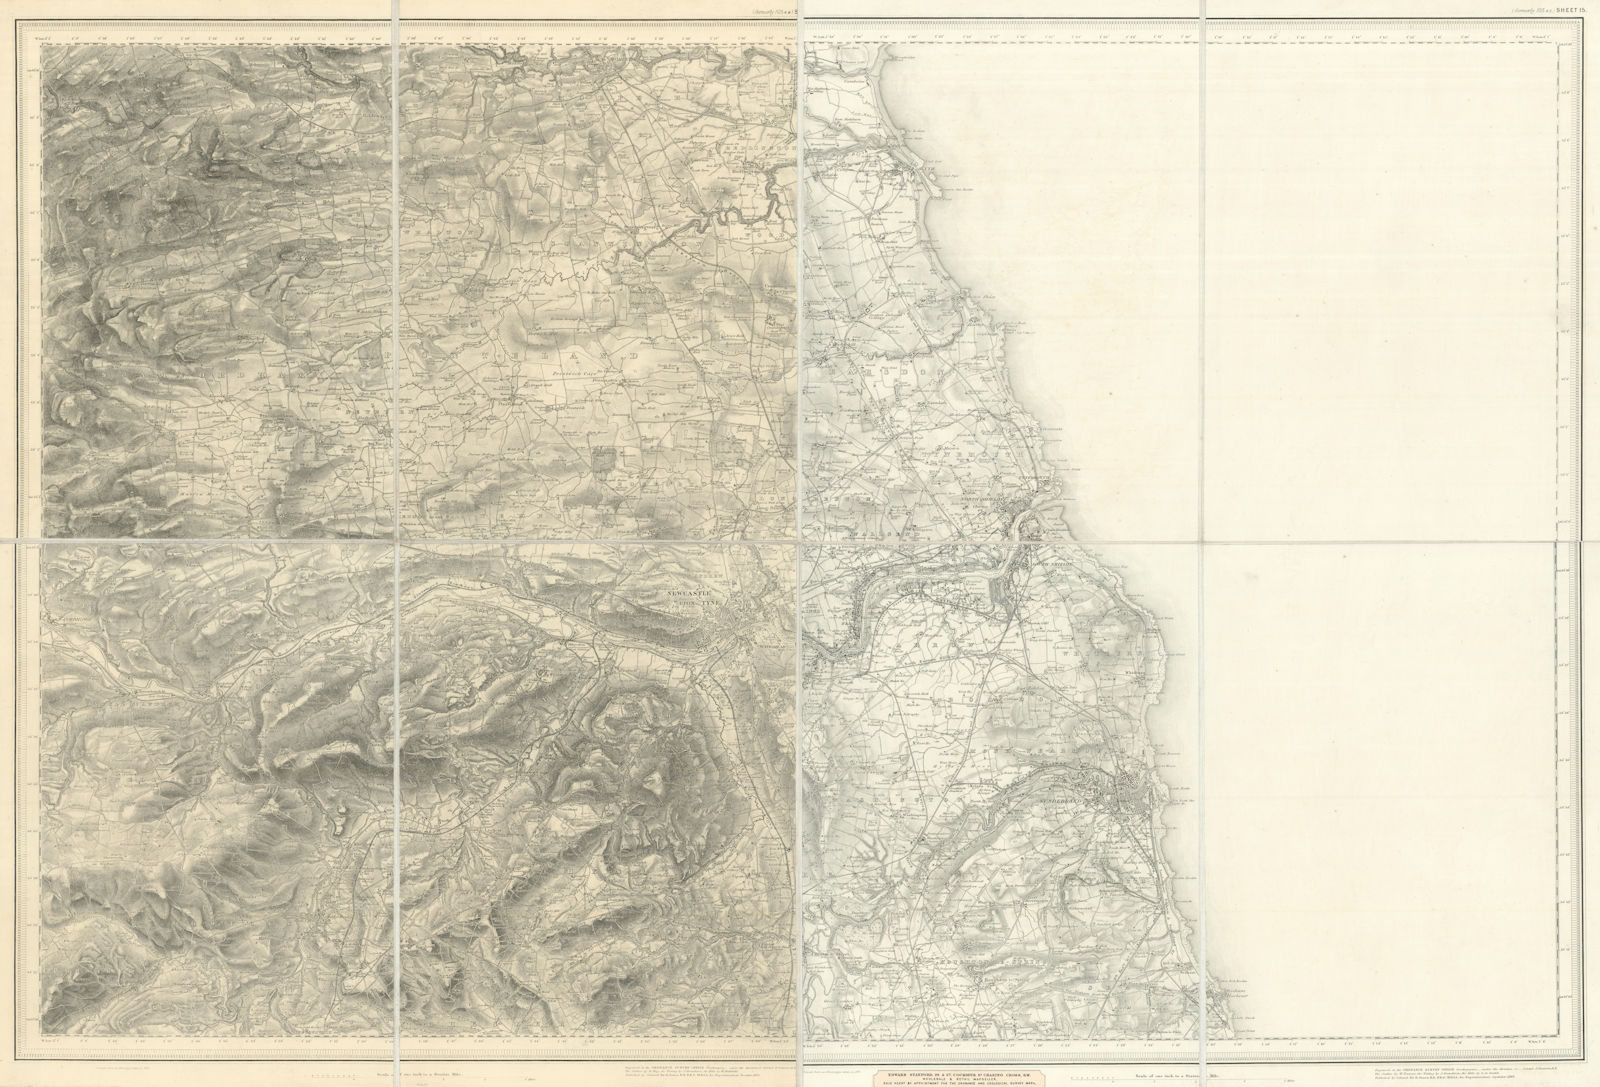 OS #105 Tyneside, Wearside & North Pennines. Newcastle Sunderland 1871 old map